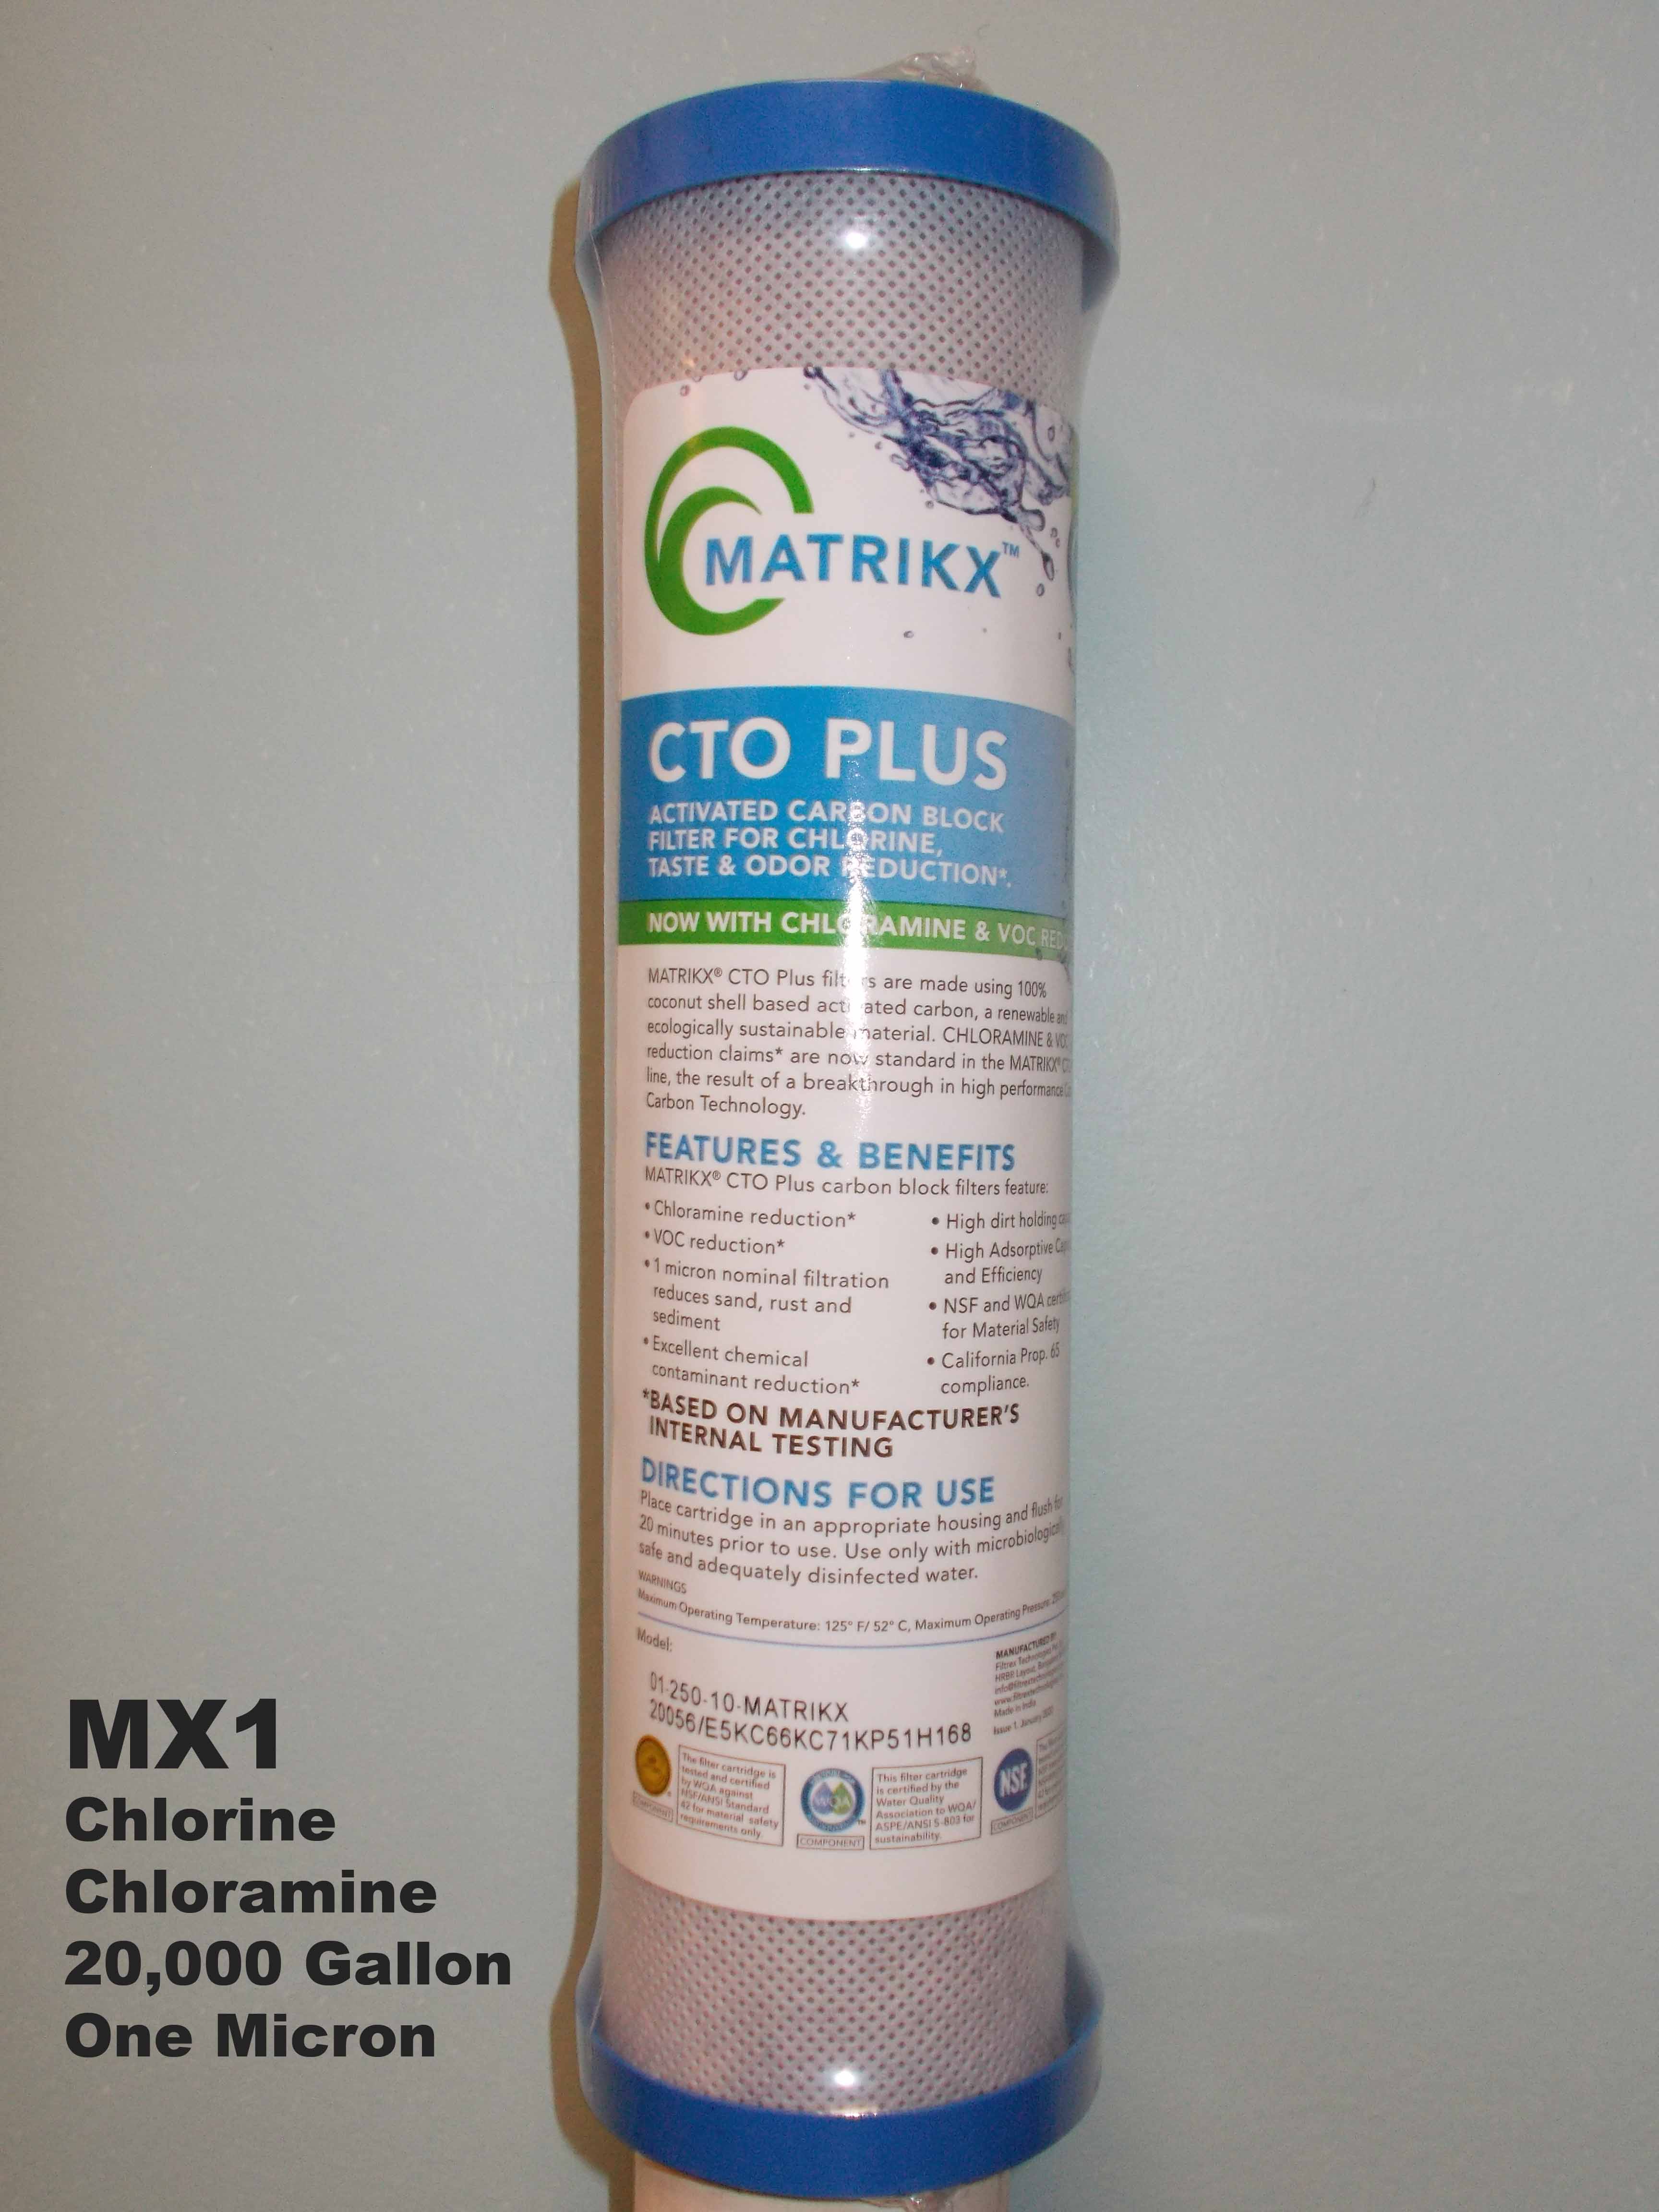 MX1 - Replacement Chlorine / Chloramine Water Filter Cartridge - 20,000 Gal. - 2.5" x 9.75"